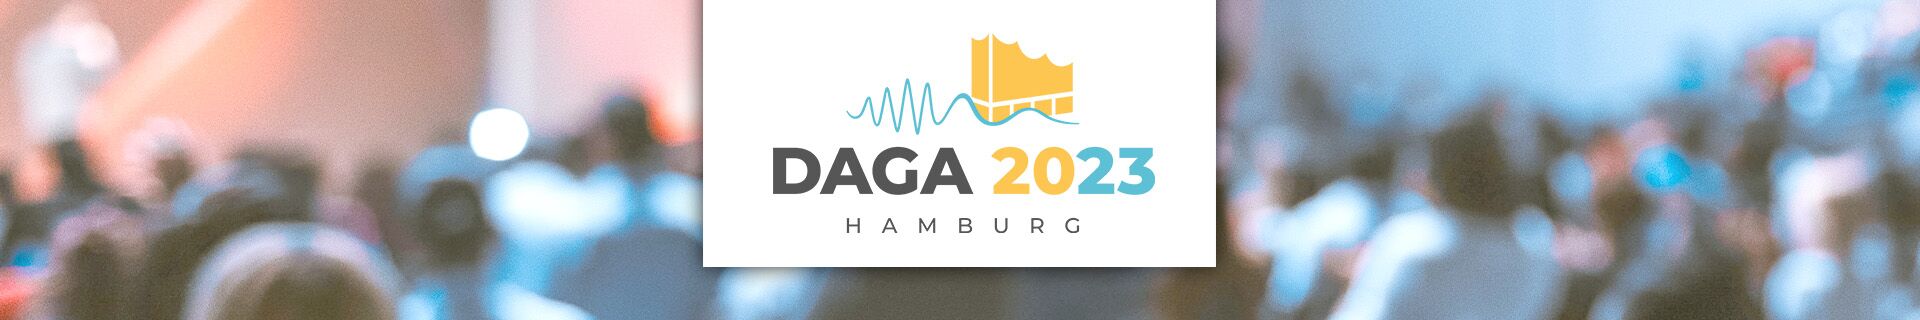 SPEKTRA at DAGA 2023 in Hamburg, Germany